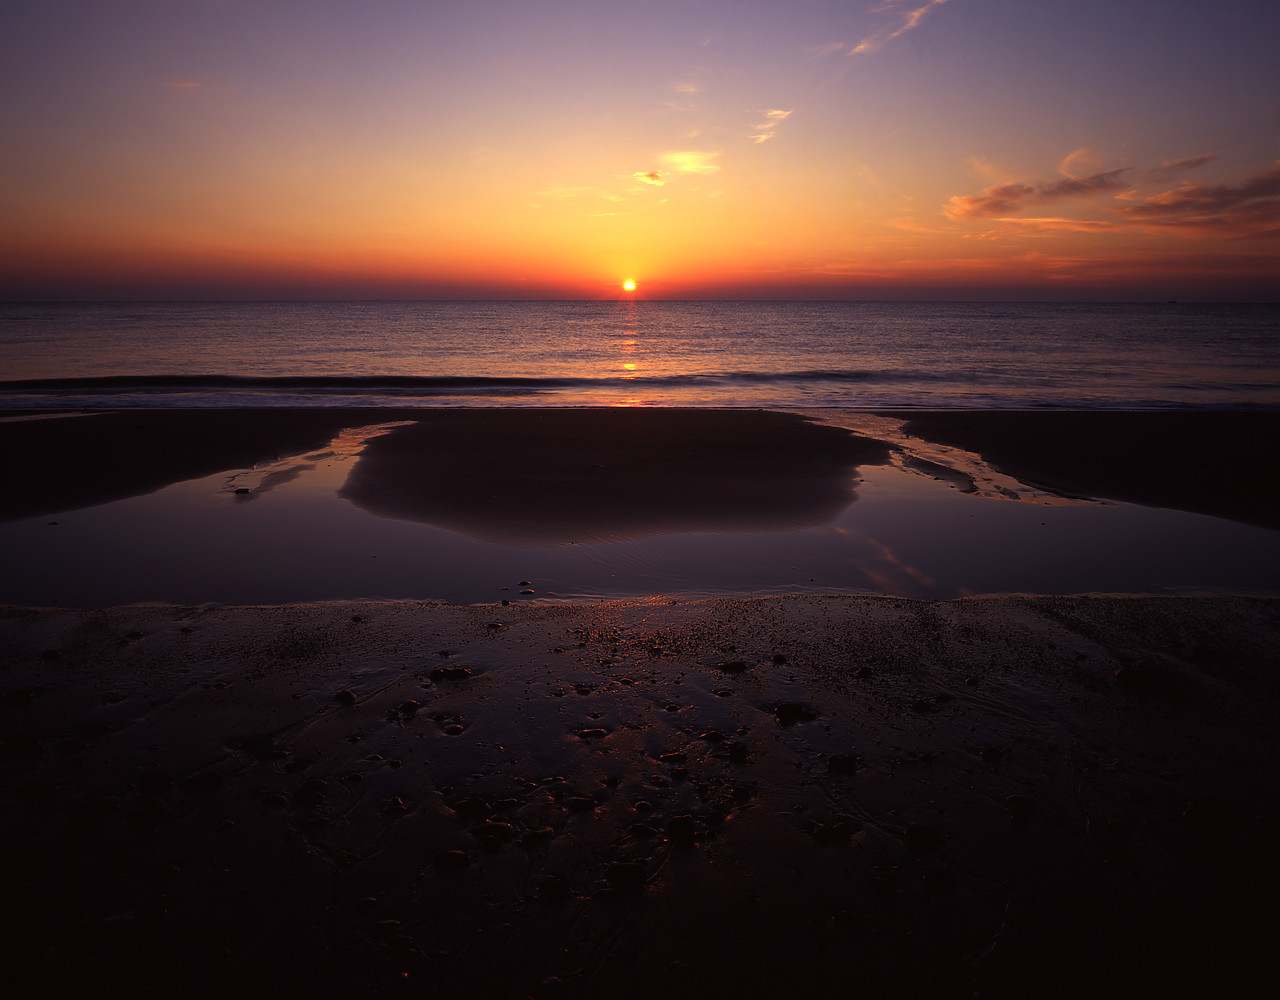 #913847-1 - Sunrise at Horsey Gap Beach, near Horsey, Norfolk, England